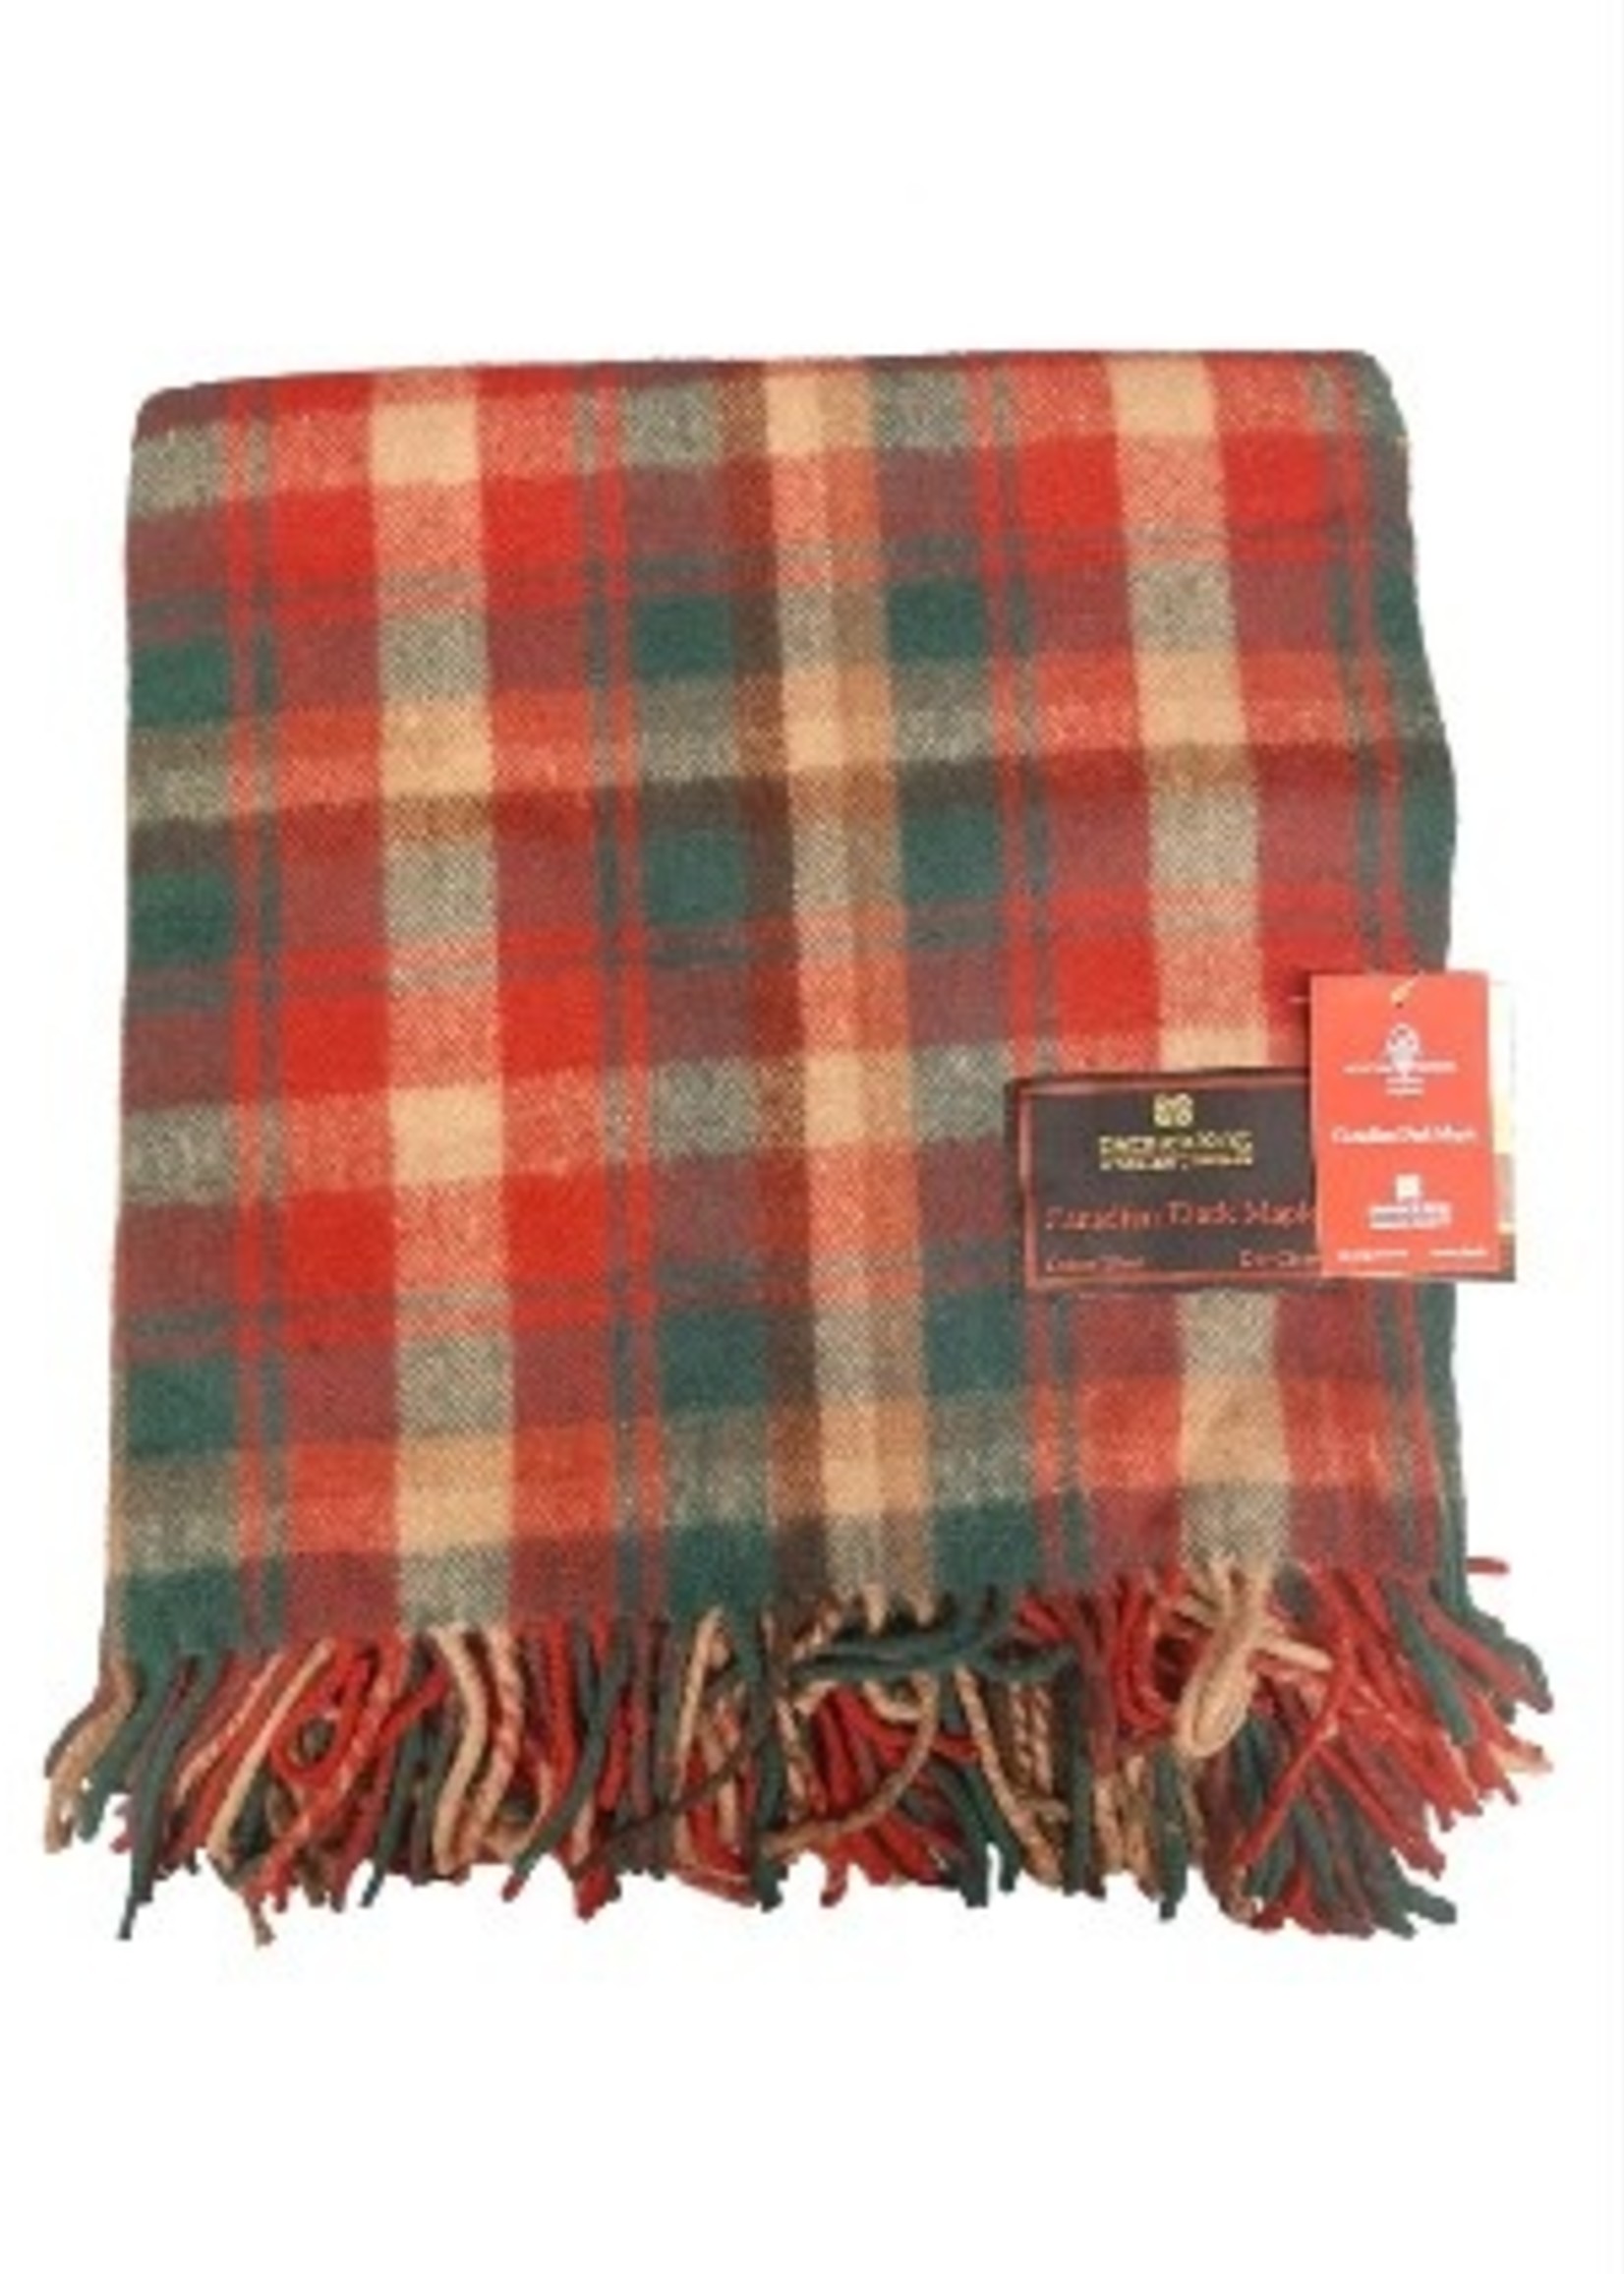 Patrick King Scottish Deluxe Wool Blanket * Dark Maple